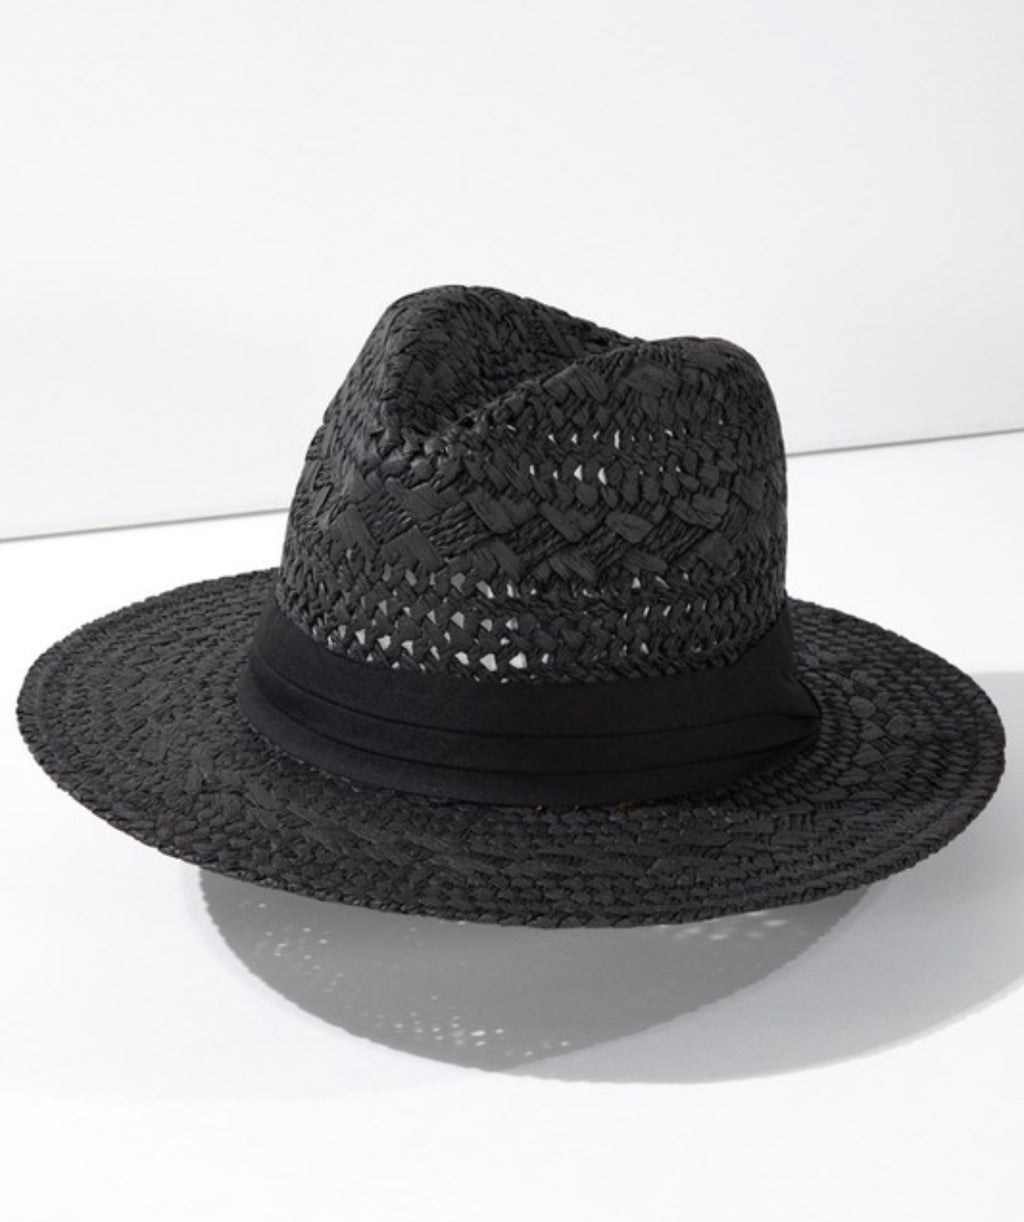 Rogue Hat Black